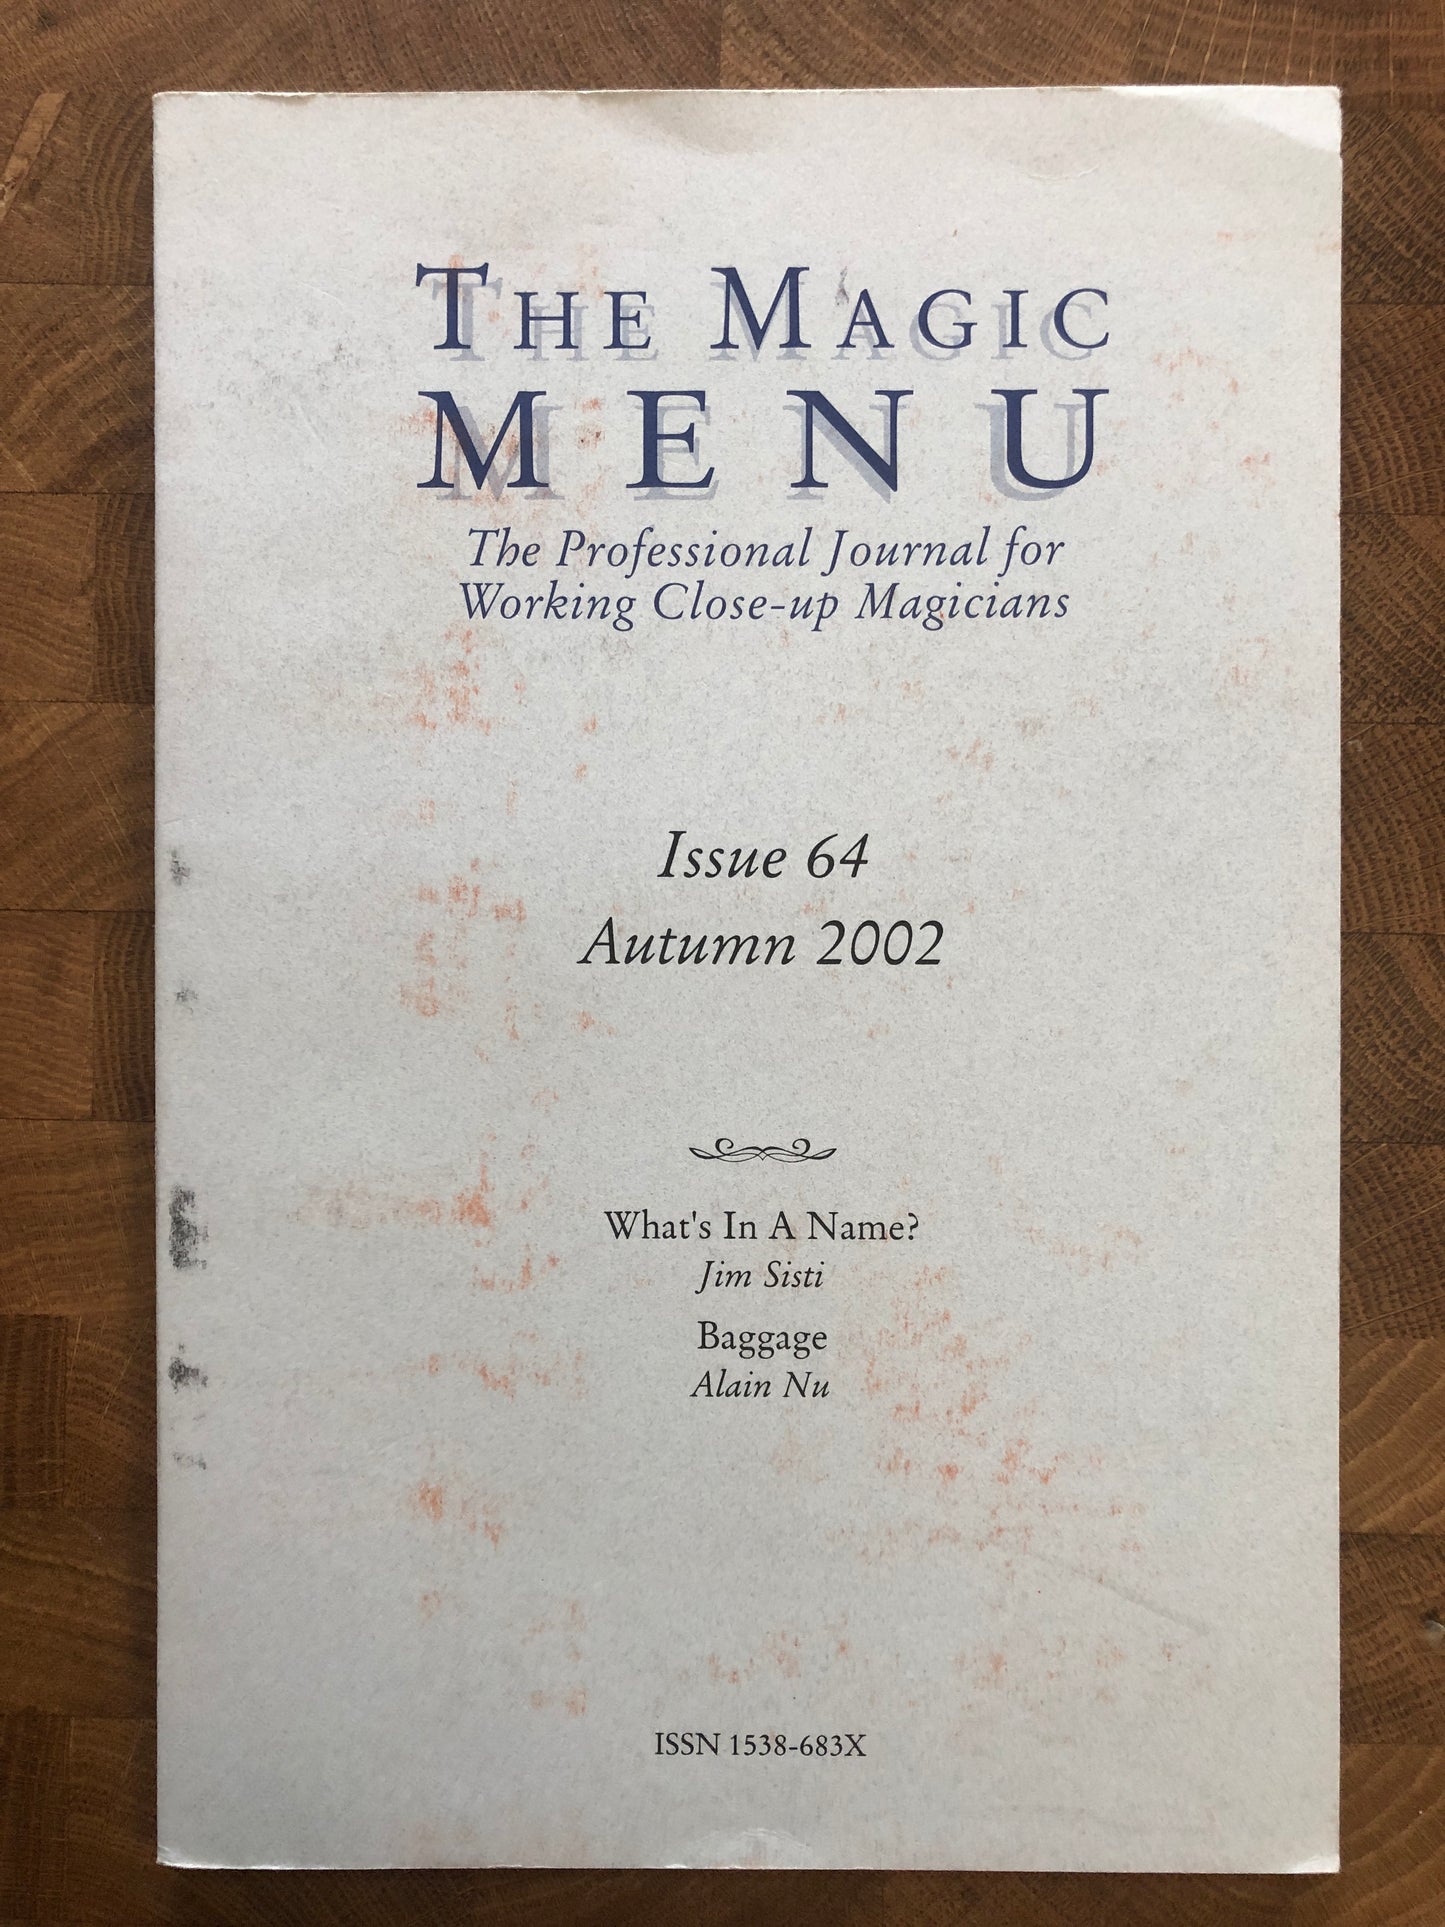 The Magic Menu (Issue 64)- Jim Sisti